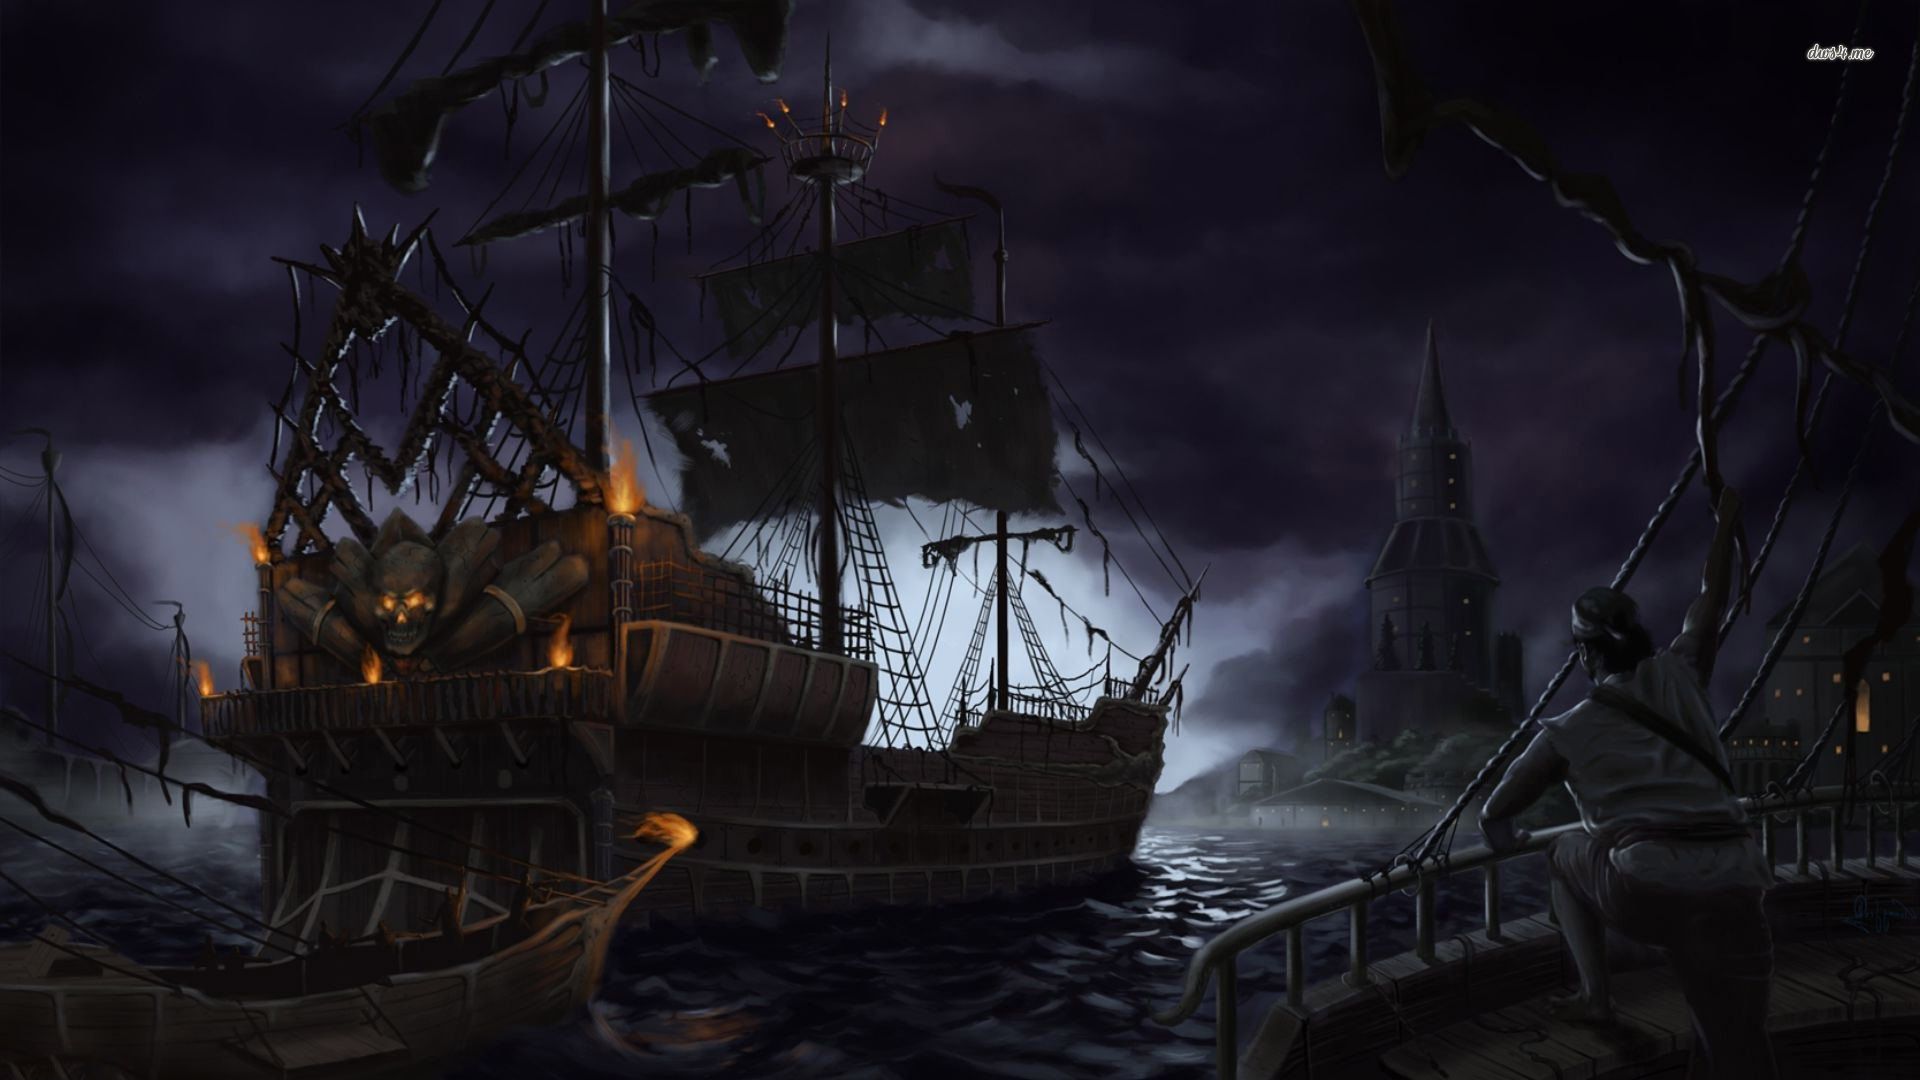 Pirate ship wallpaper - Fantasy wallpapers - #10855